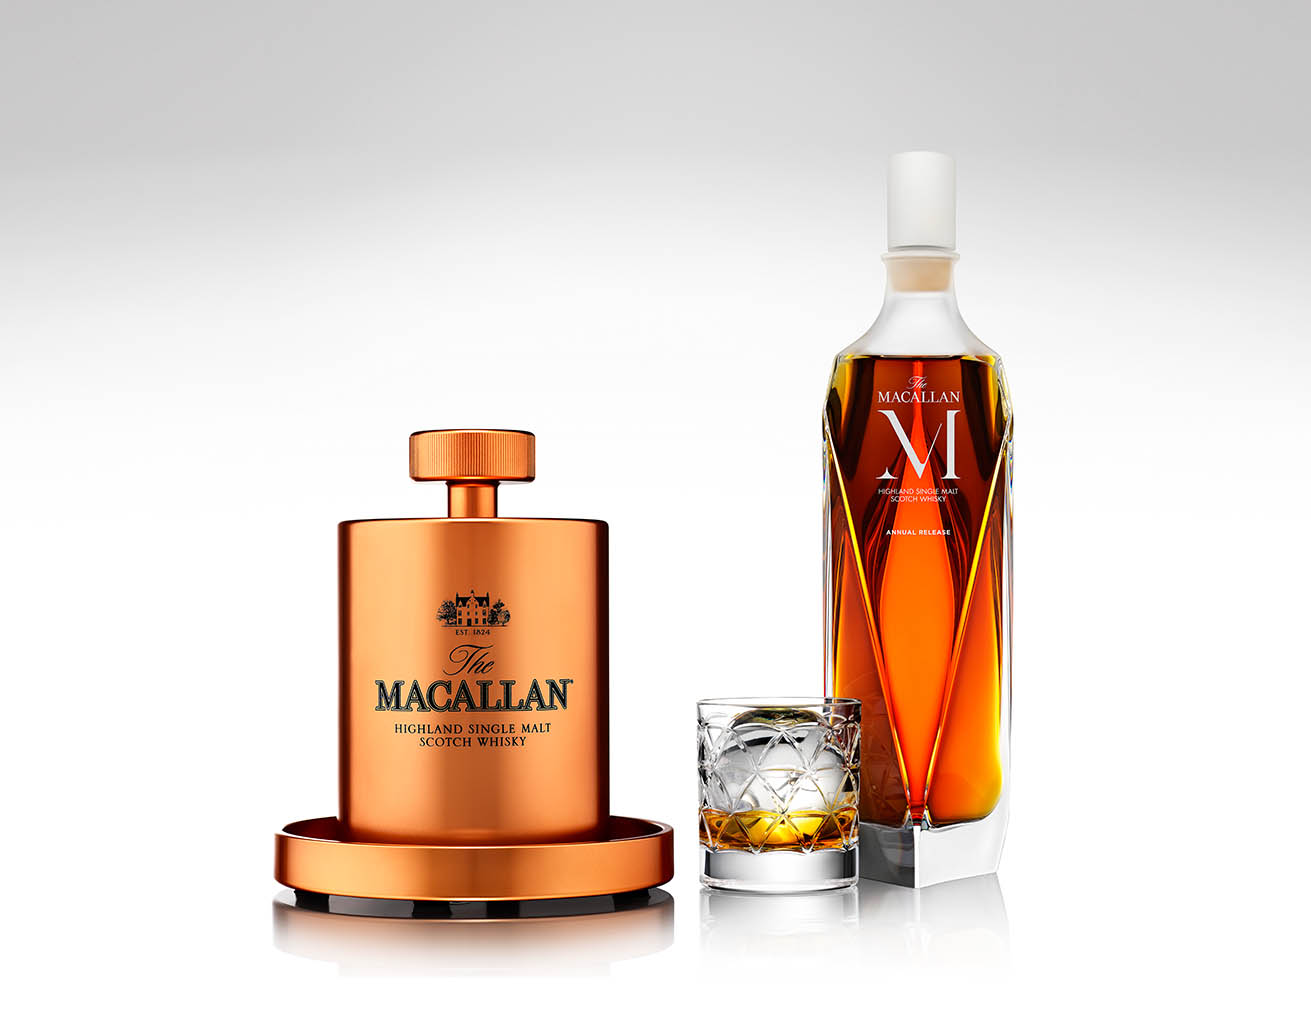 Packshot Factory - Whisky - Macallan whisky bottle and serve